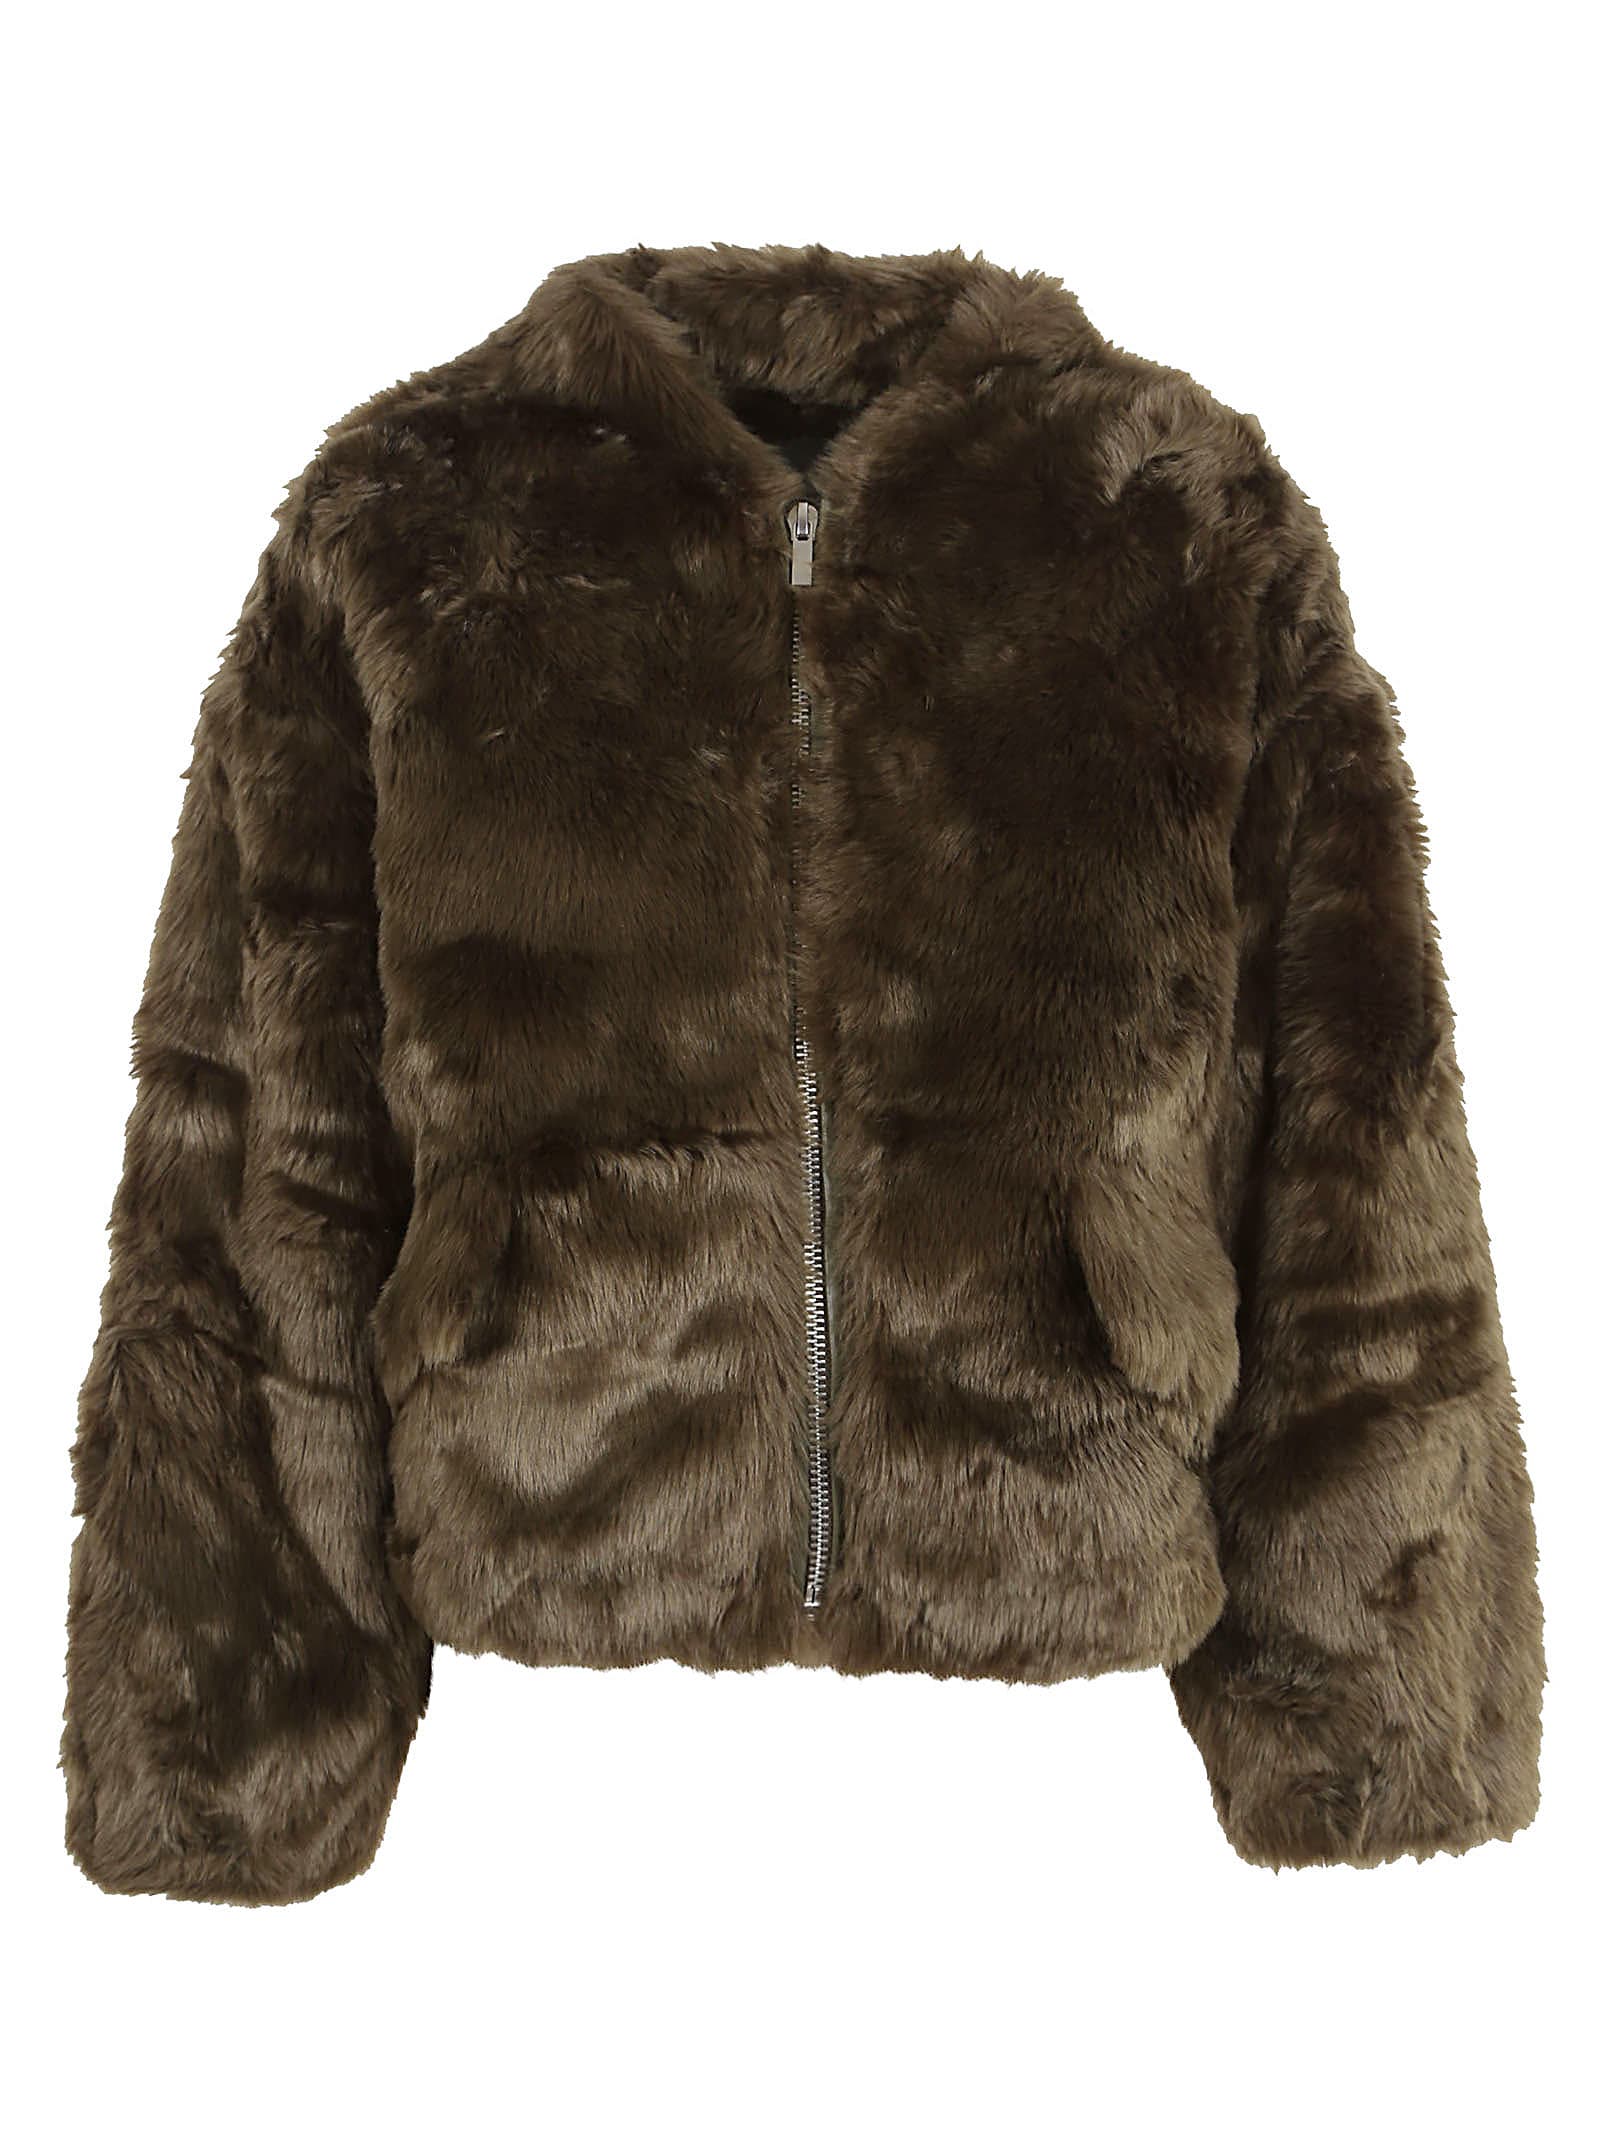 Proenza Schouler Faux Fur Cropped Jacket